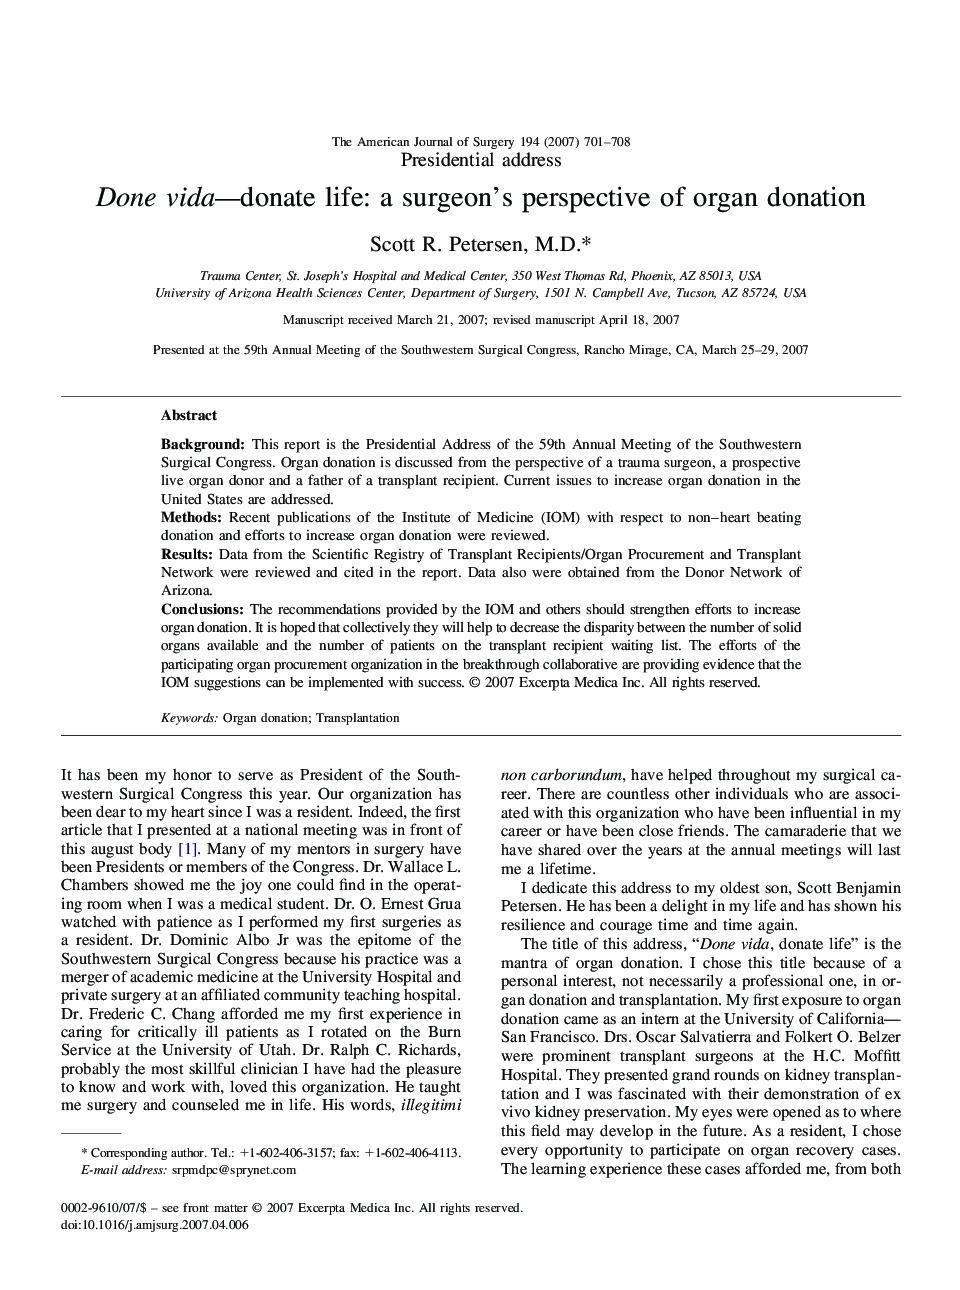 Done vida—donate life: a surgeon’s perspective of organ donation